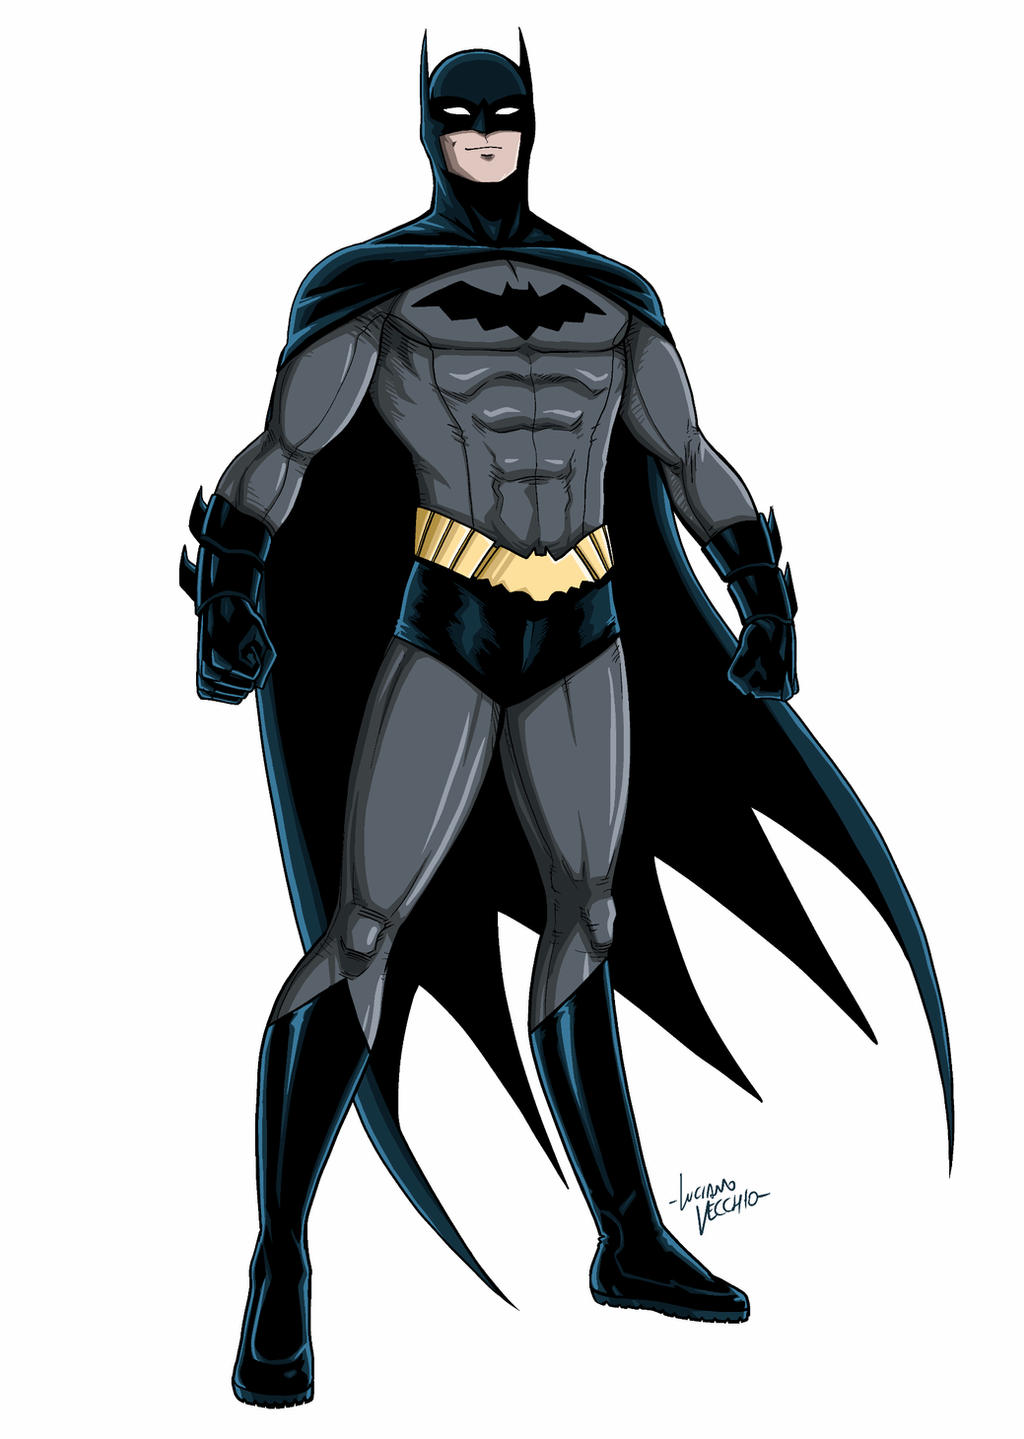 Batman Art by lucianovecchio